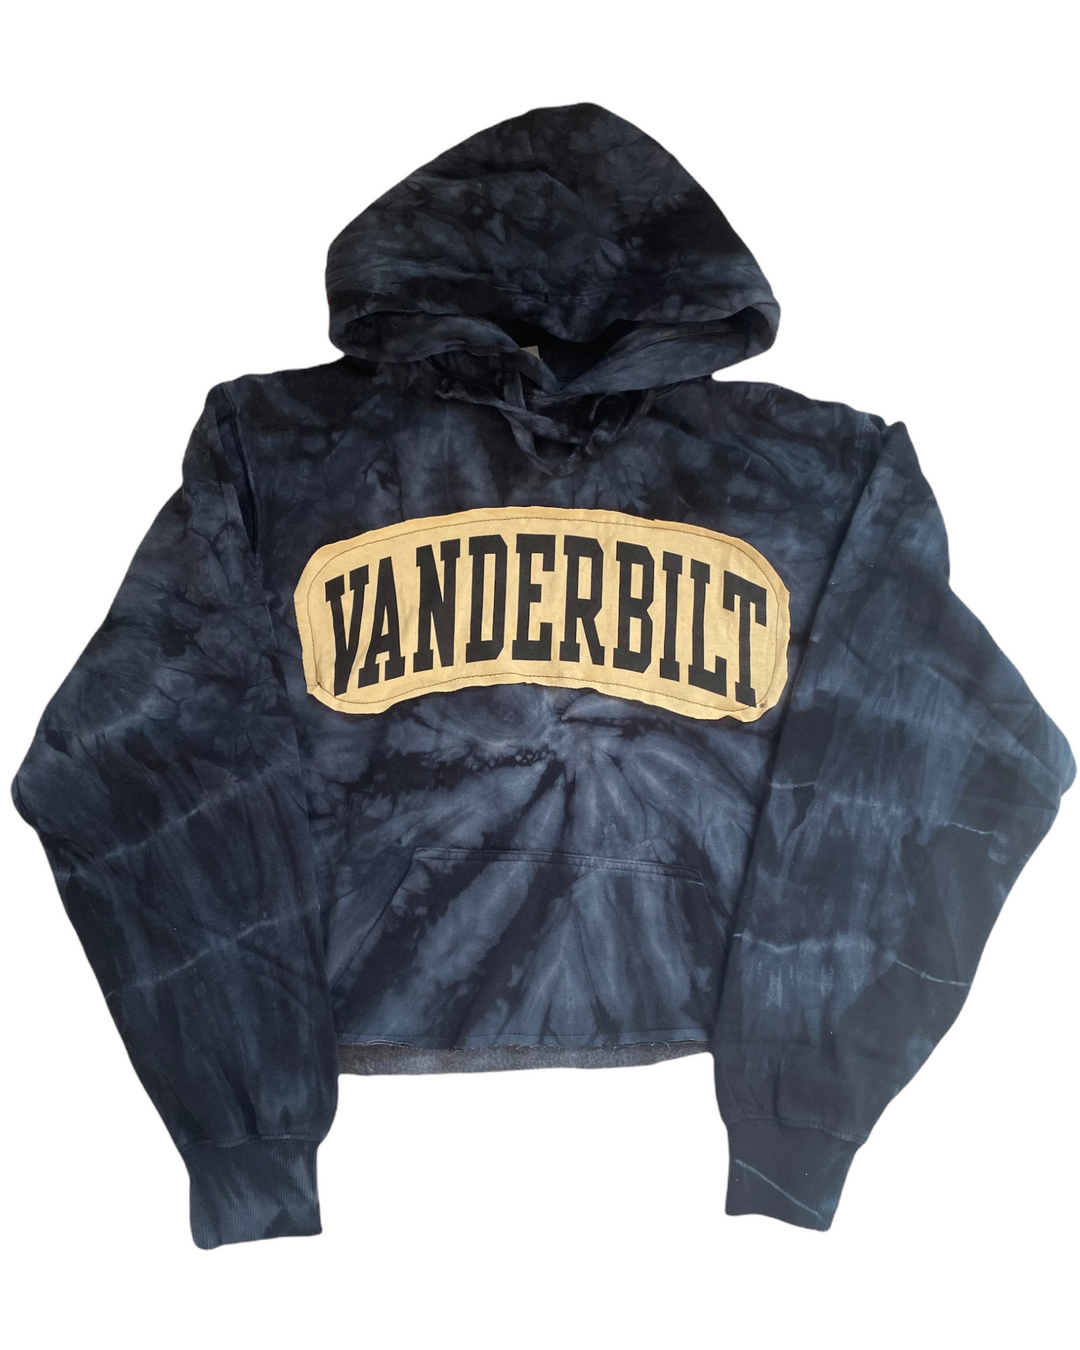 Vanderbilt Cropped & Patched Sweatshirt